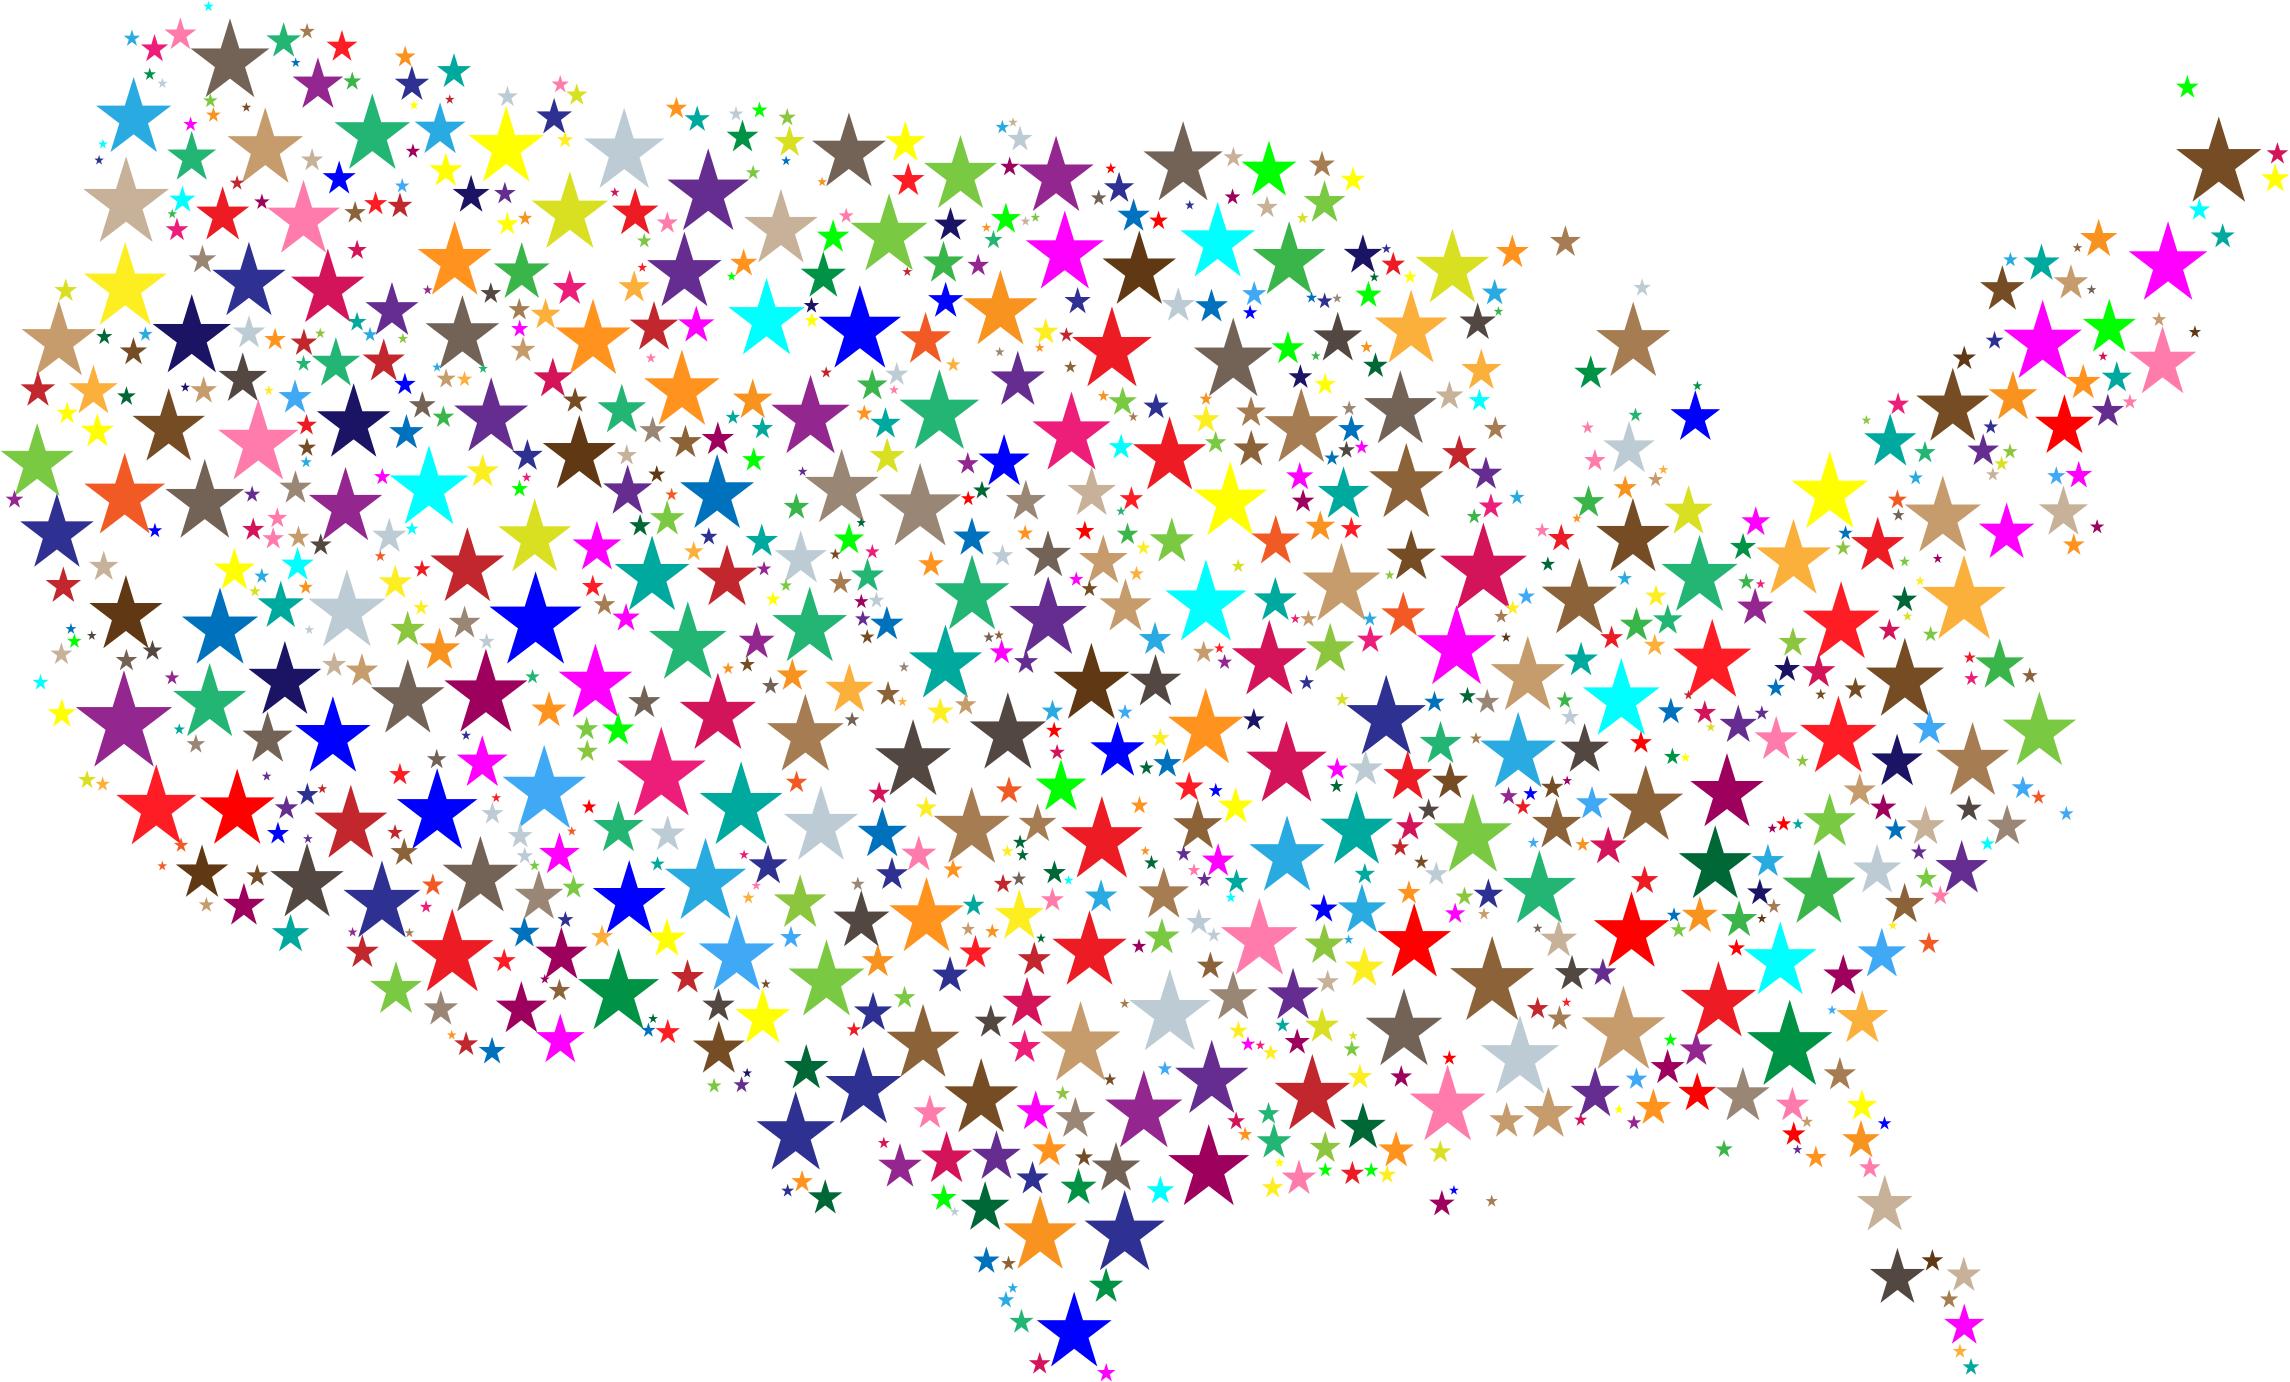 United States Map icons